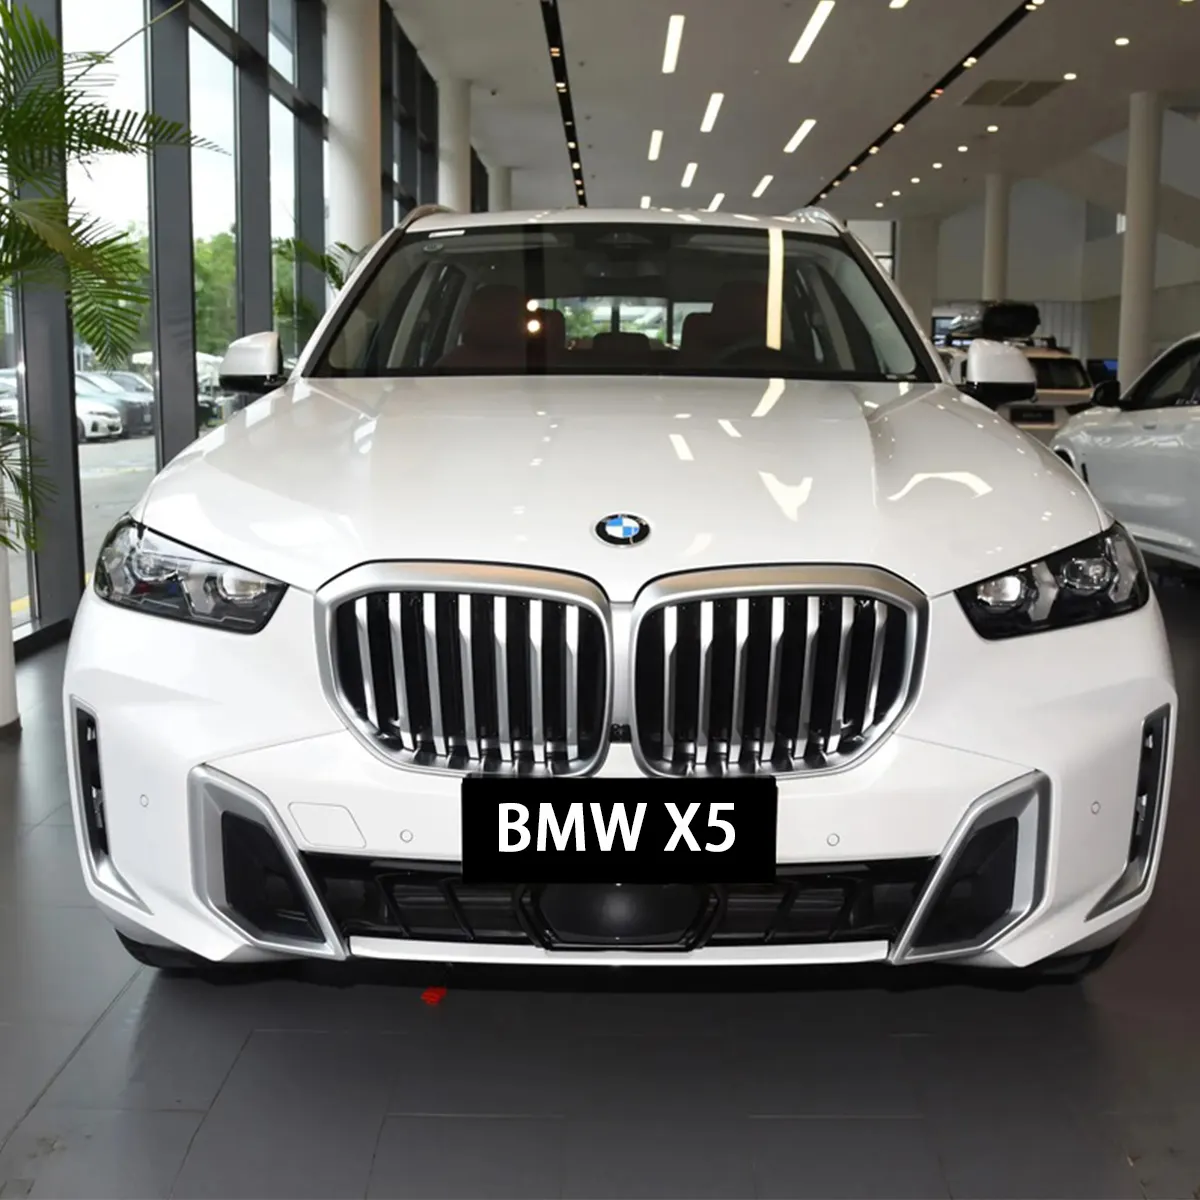 BMWX5 48V MHEV kendaraan xDrive30Li xDrive40Li edisi olahraga 3.0T 381hp L6 250km/jam BMW X5 mobil listrik hibrida ringan